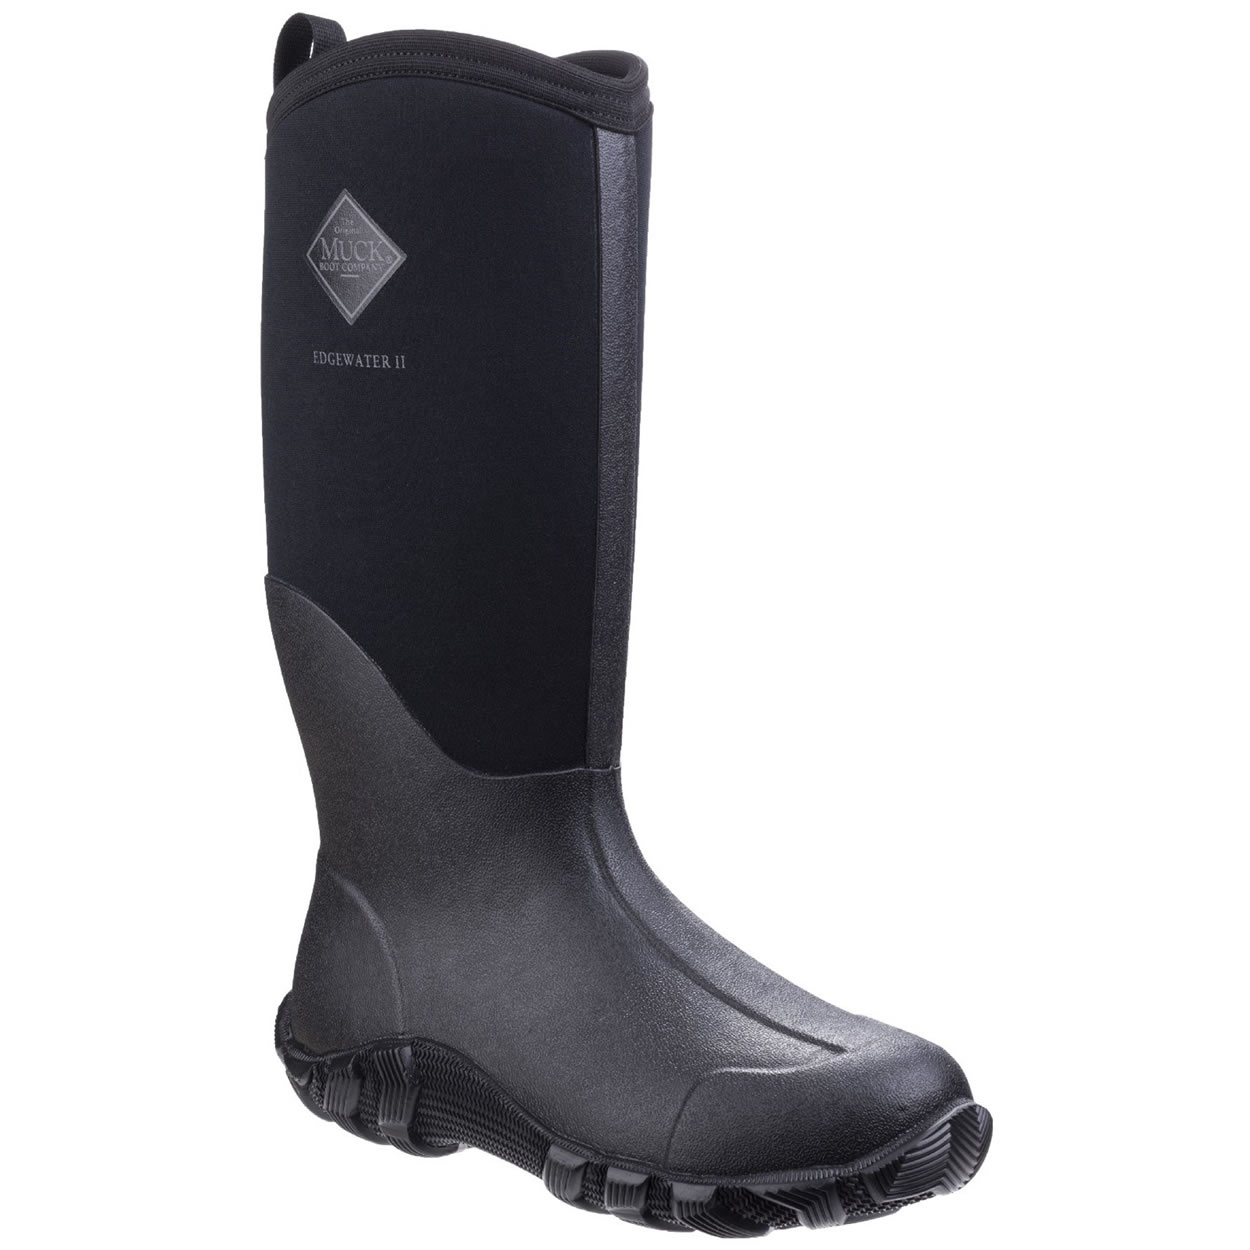 Muck Boot - Edgewater II - Black - £59 | Garden4Less UK Shop